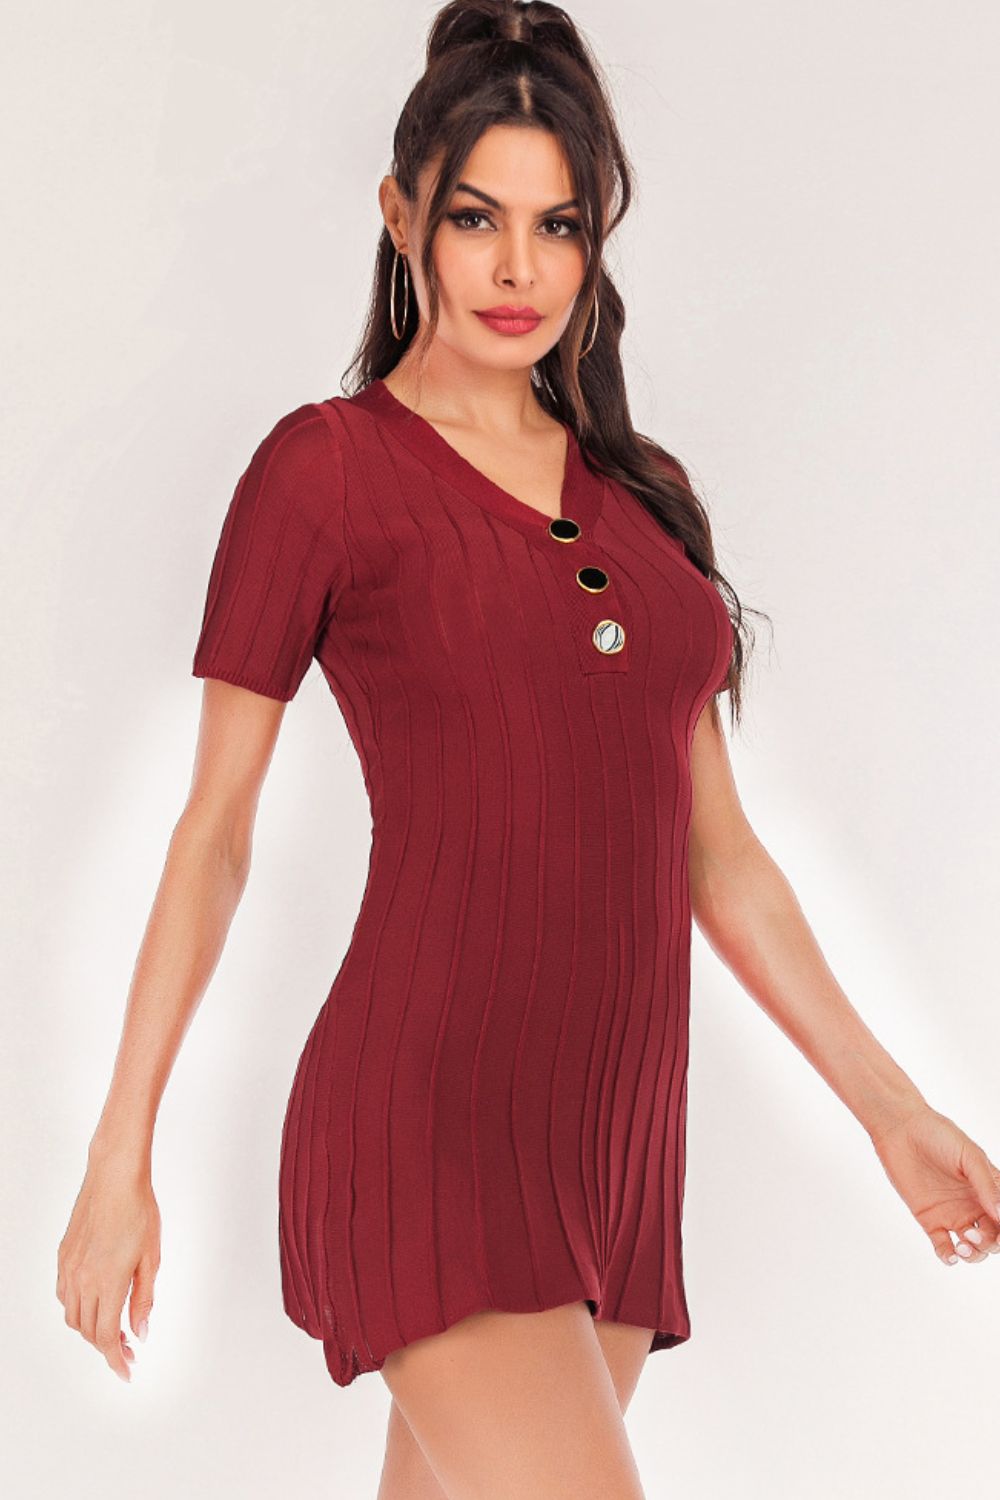 Buttoned Short Sleeve V-Neck Knit Dress - 2 colors - women's dress at TFC&H Co.